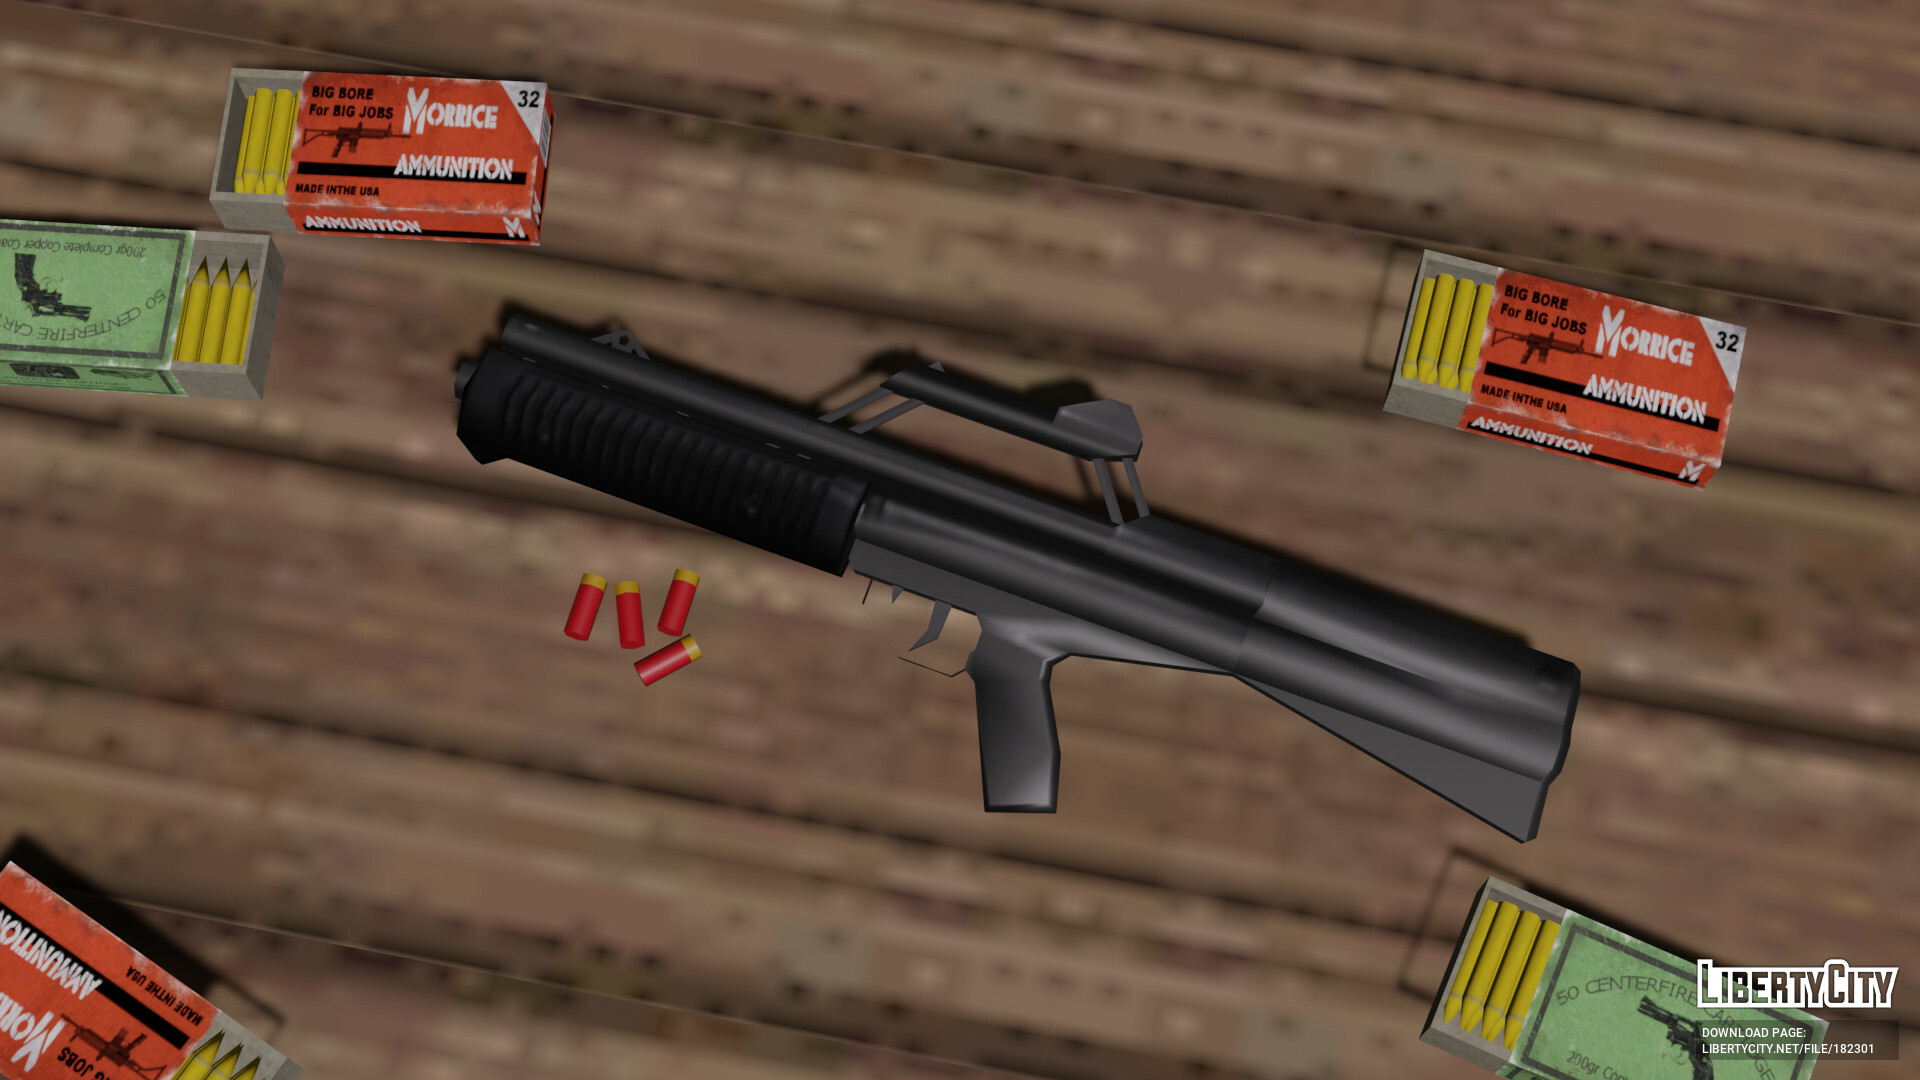 New Gta Sa Style Weapons For Gta San Andreas 365 Weapon Mods For Gta